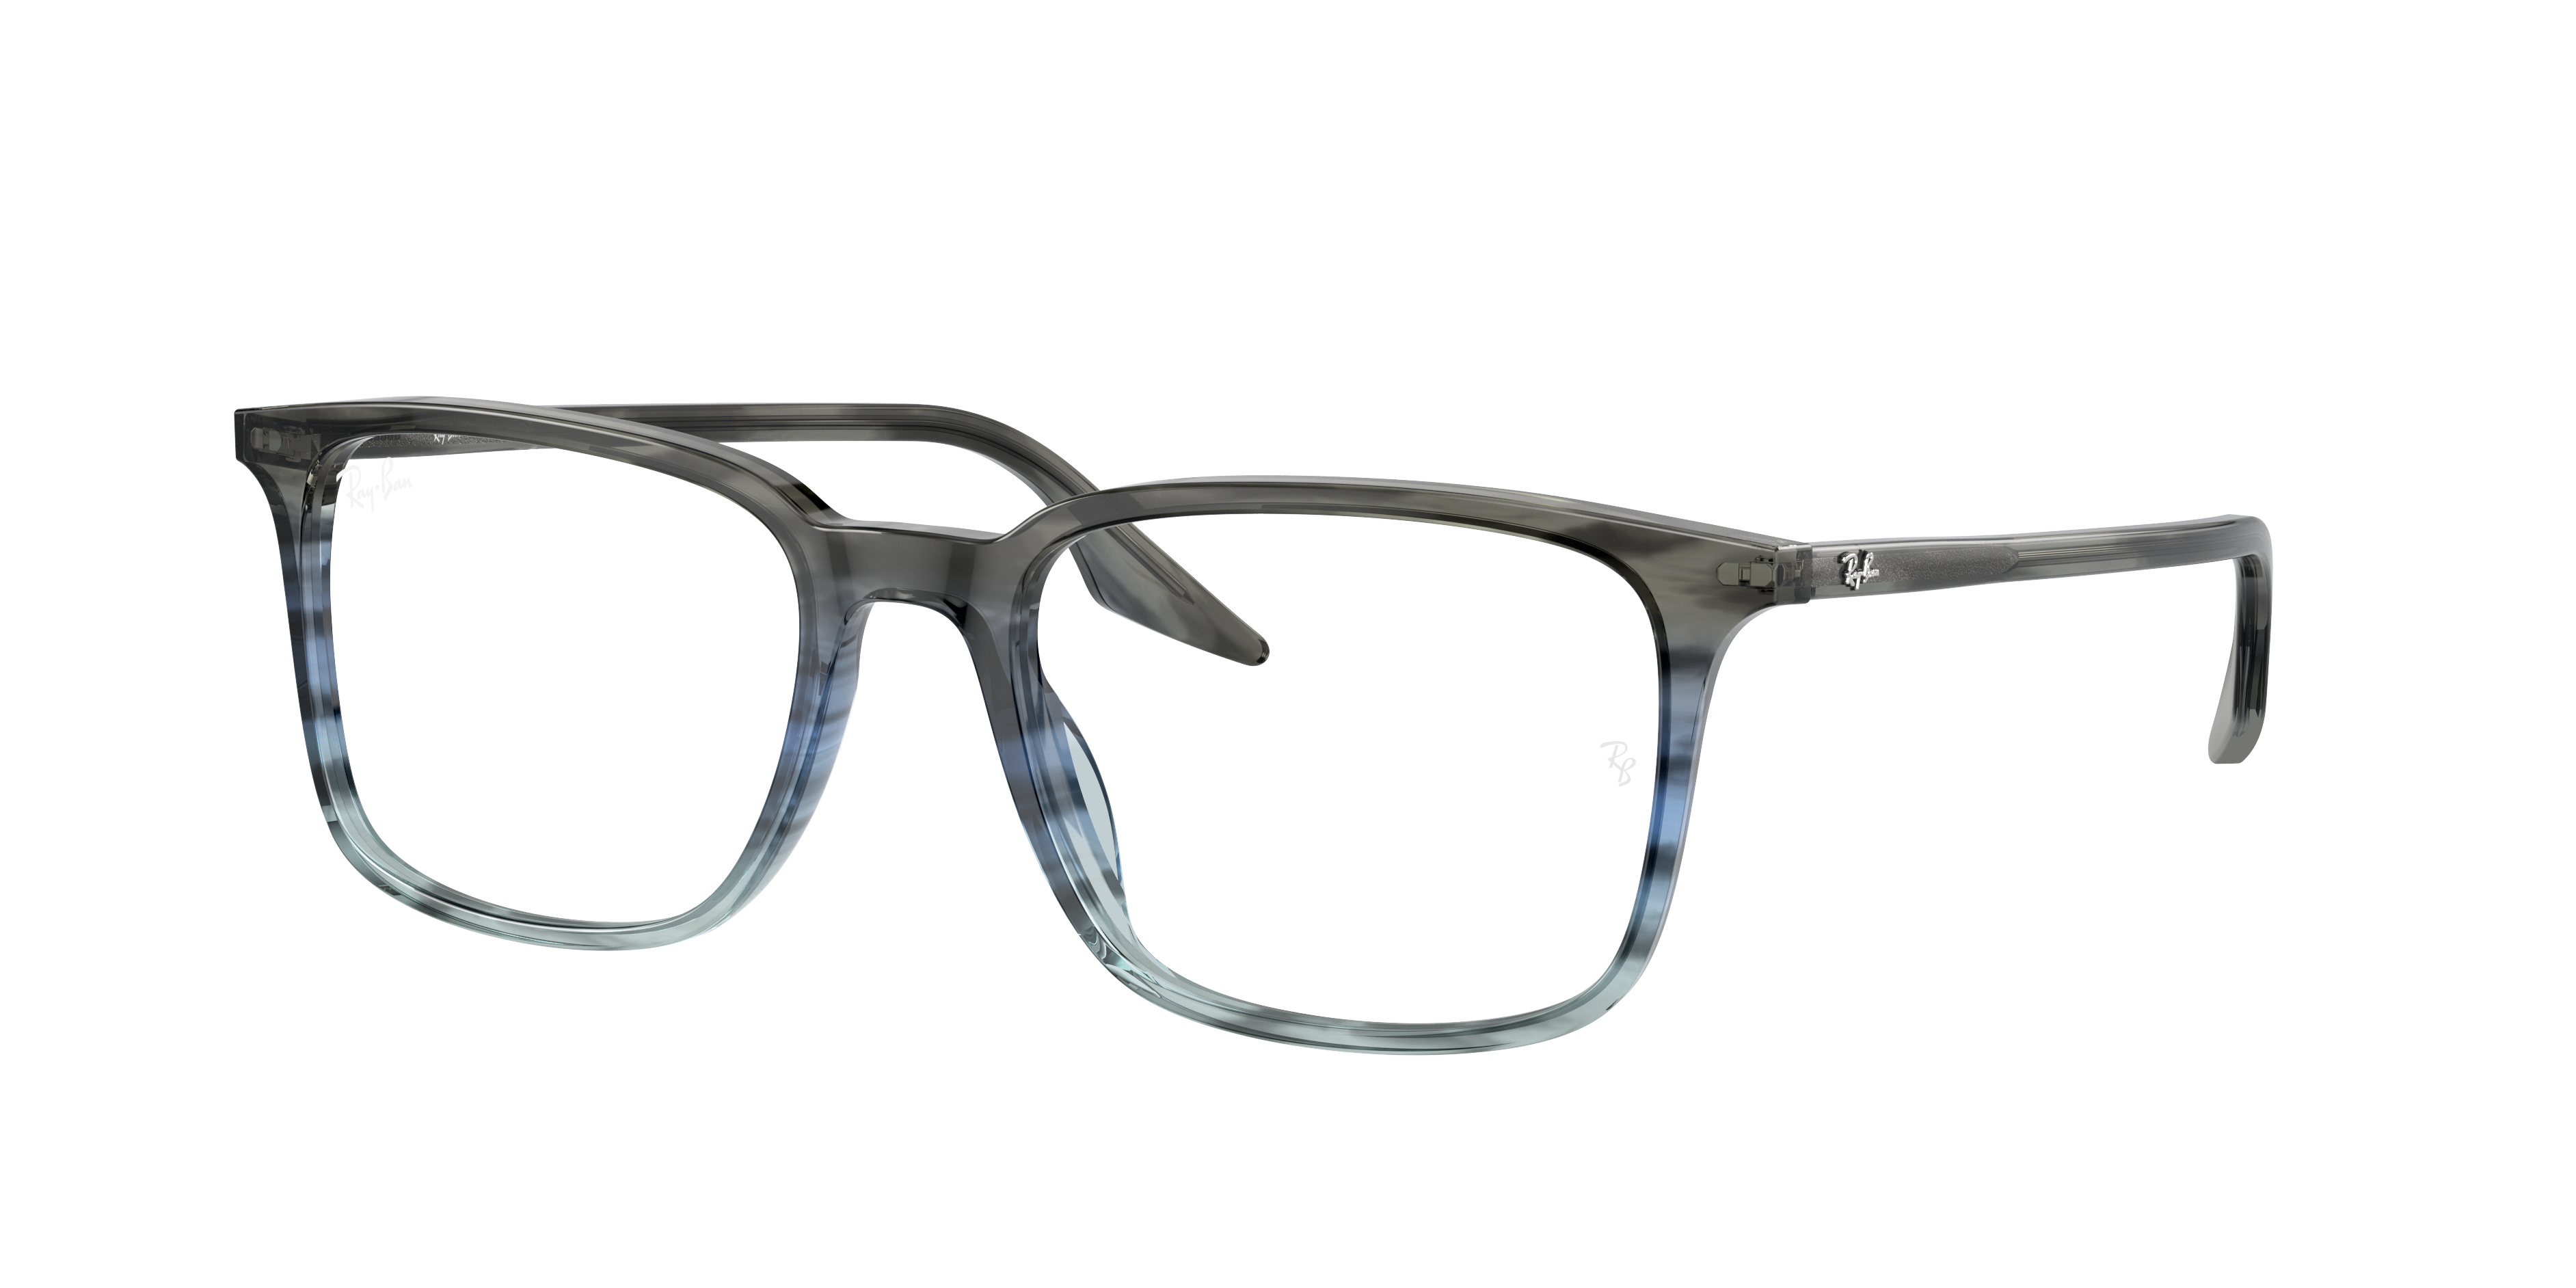 Rb5421 Optics Eyeglasses with Striped Grey & Blue Frame - RB5421 | Ray ...